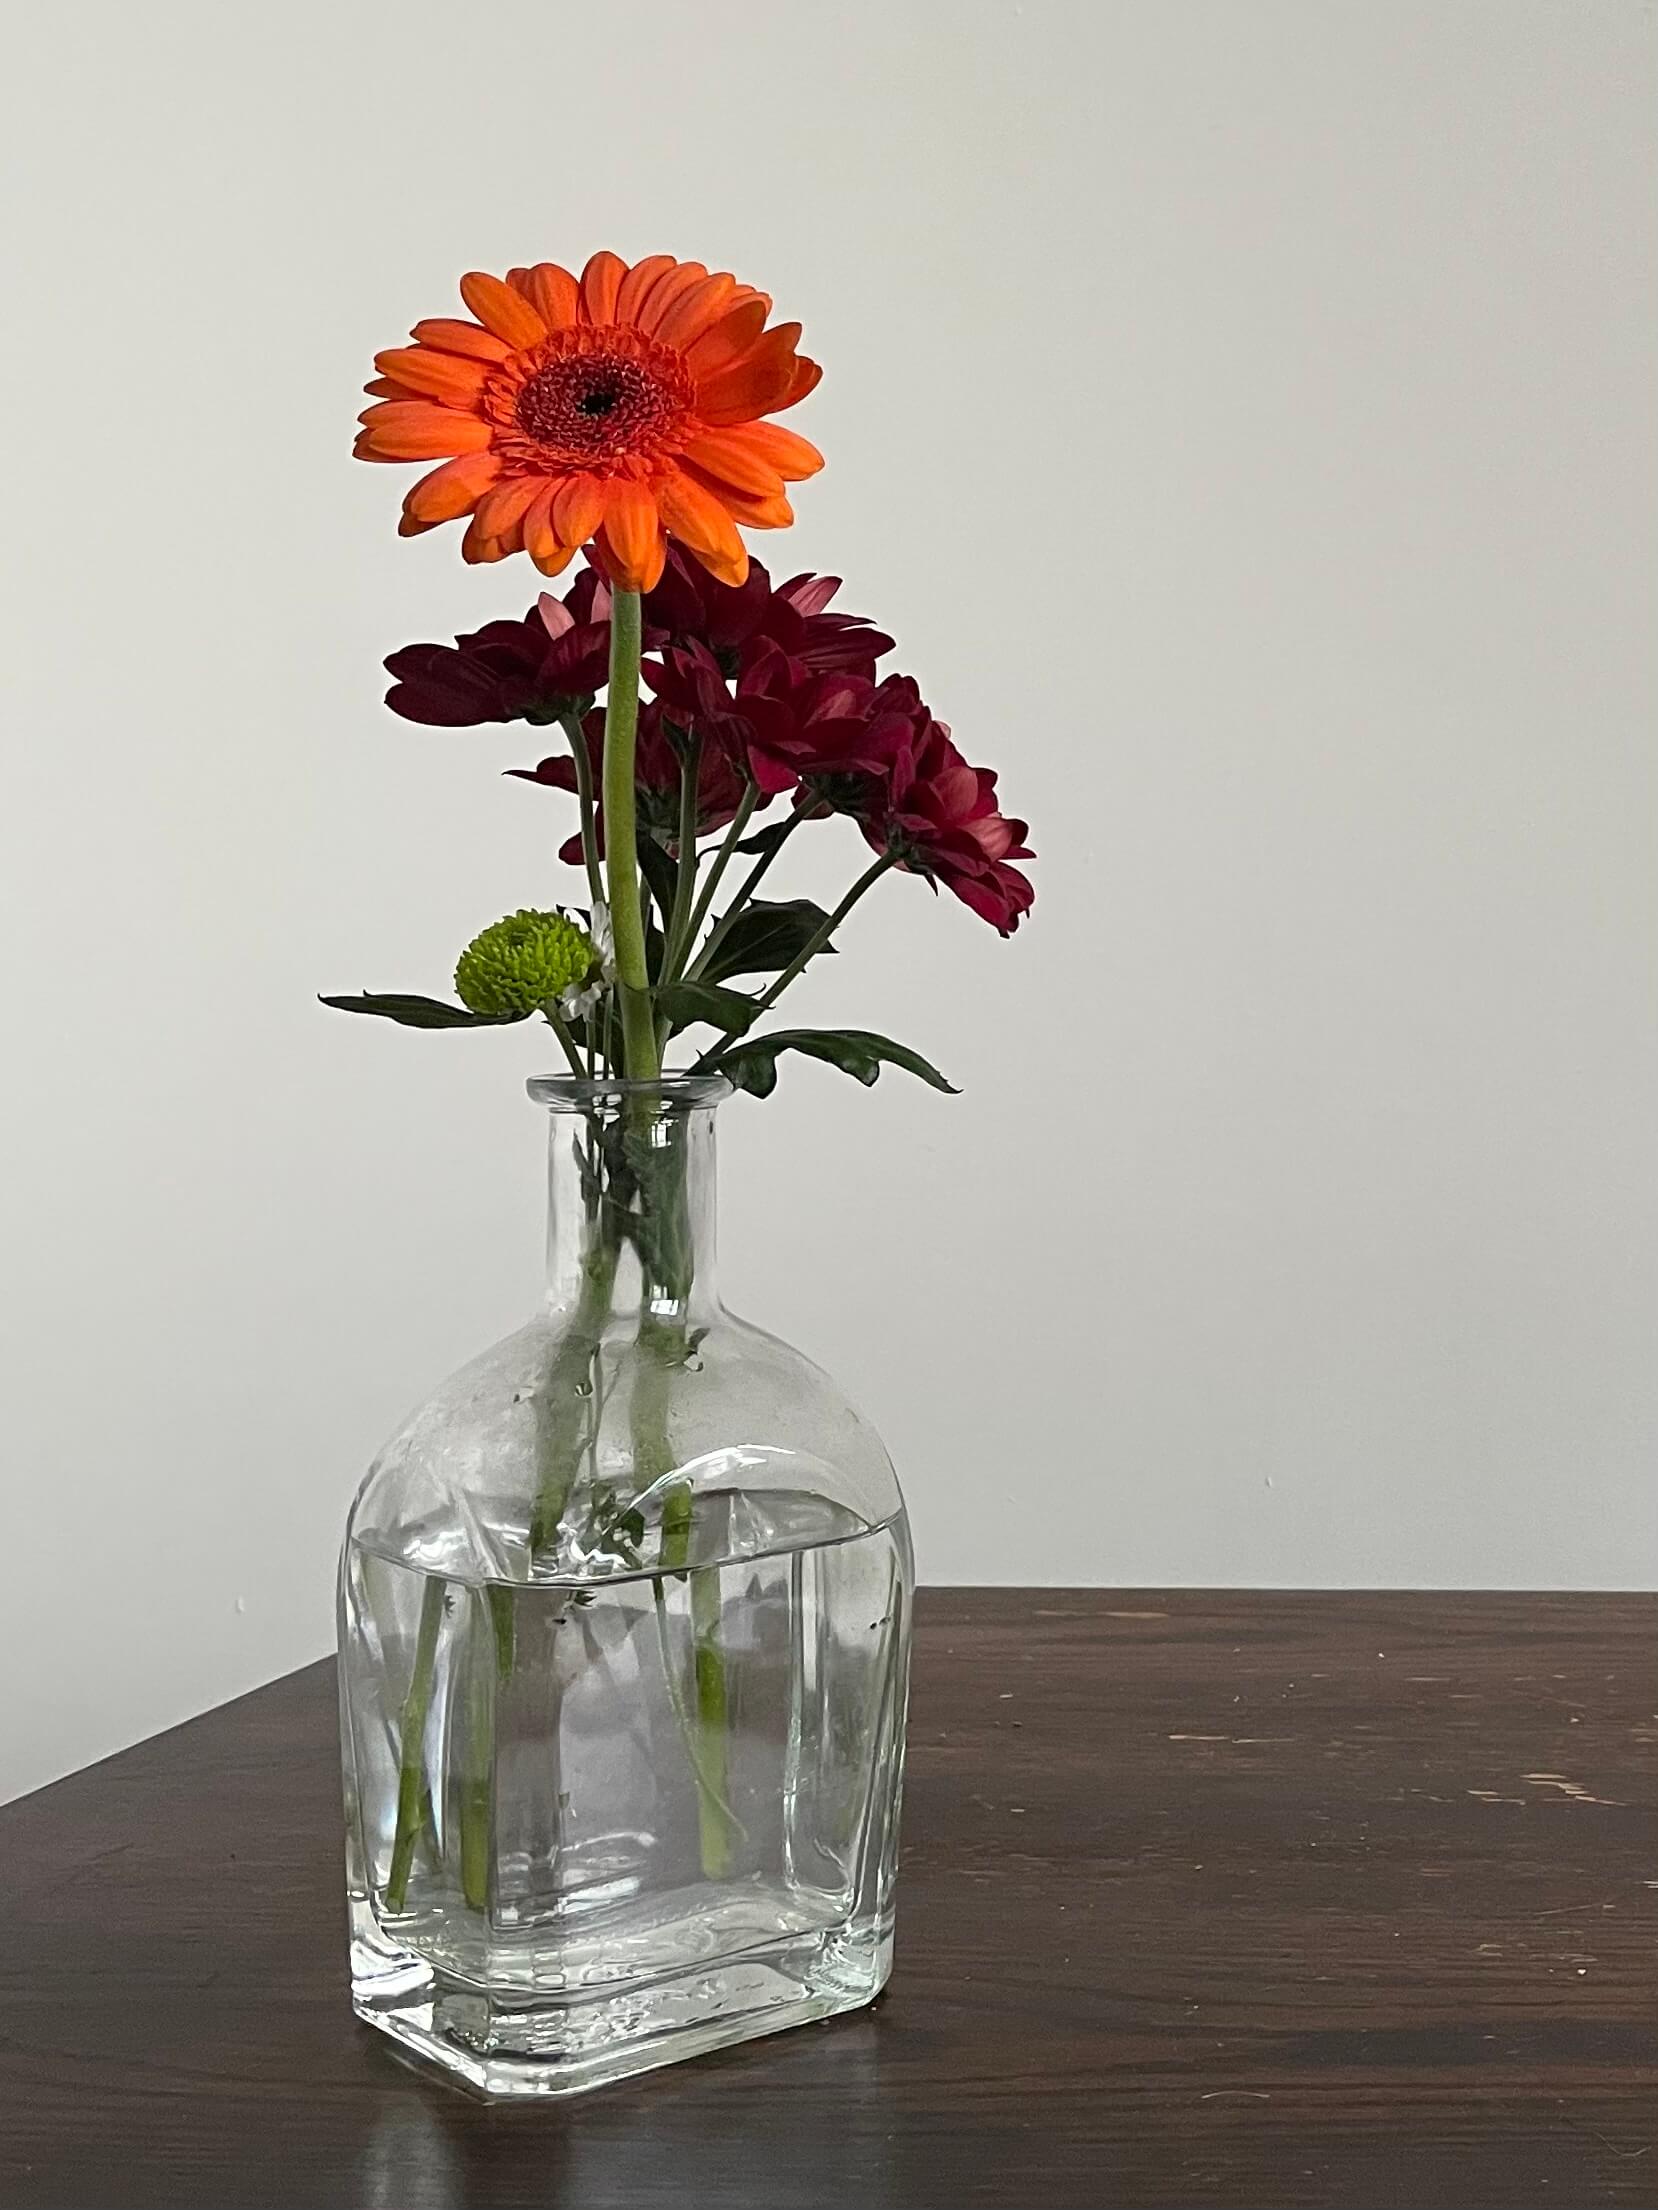 flower in vase on wooden table